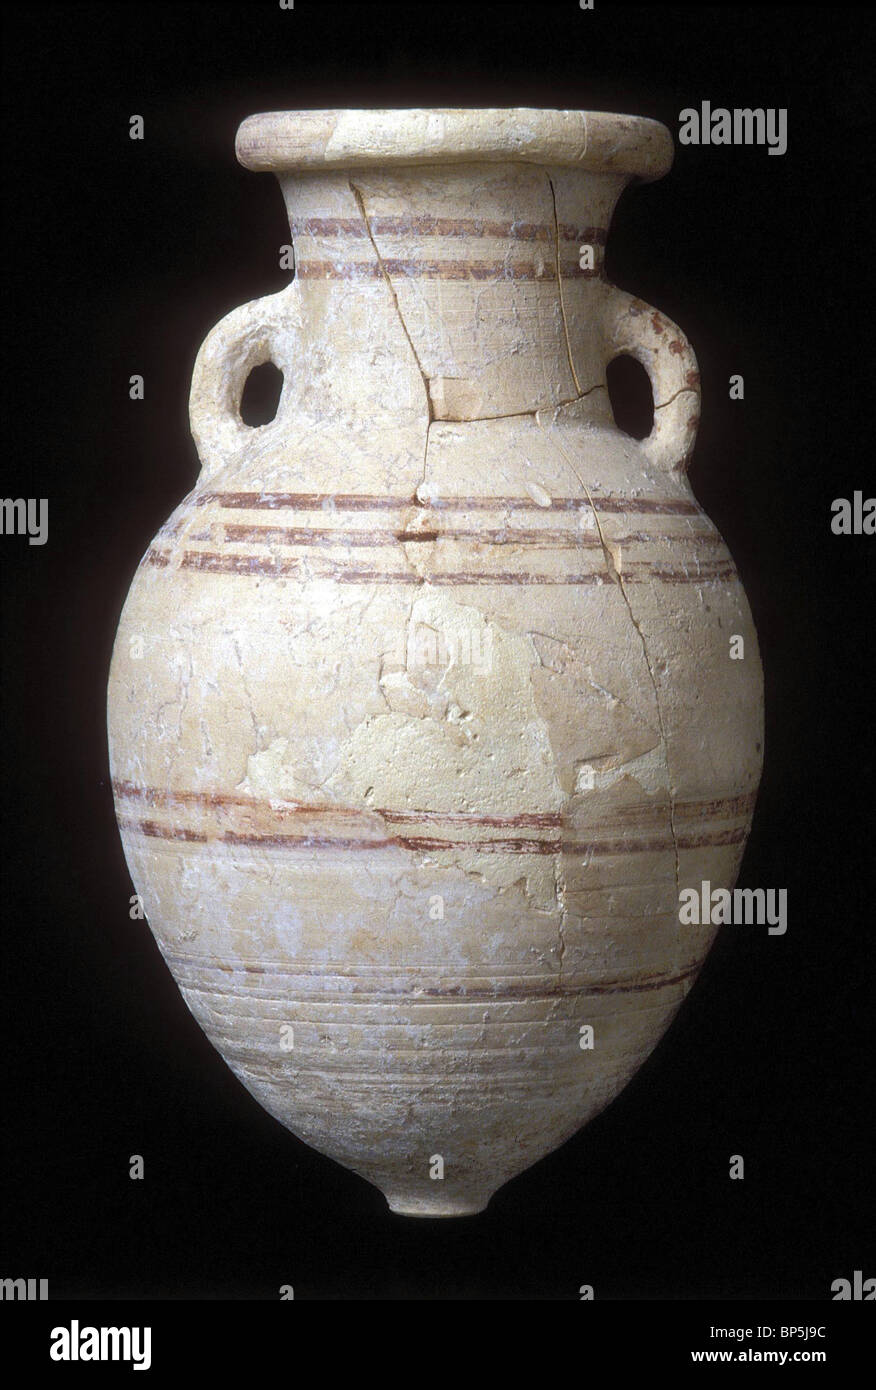 3678. POTTERY, MIDDLE BRONZE PERIOD (CNAANITE) C. 1550 B.C. EXCAVATED AT DOR Stock Photo